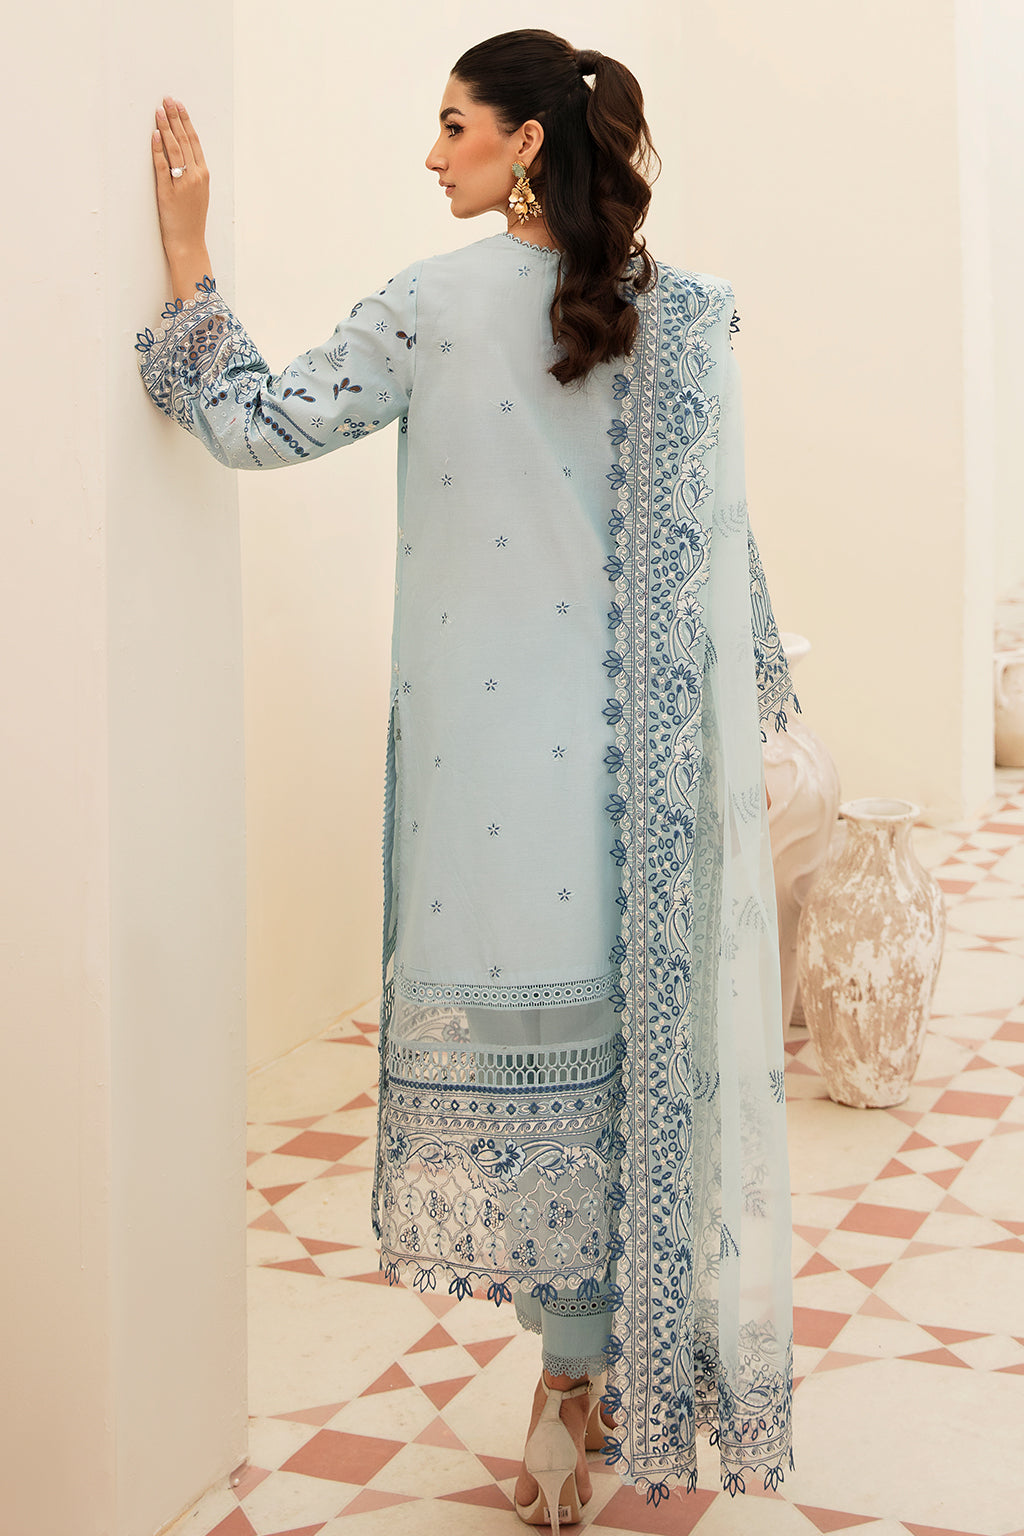 Shop Now, POWDER BLUE - Festive Chikankari Collection 2023 - Afrozeh - Shahana Collection UK - Wedding and Bridal Party Dresses - Edi Festive 2023